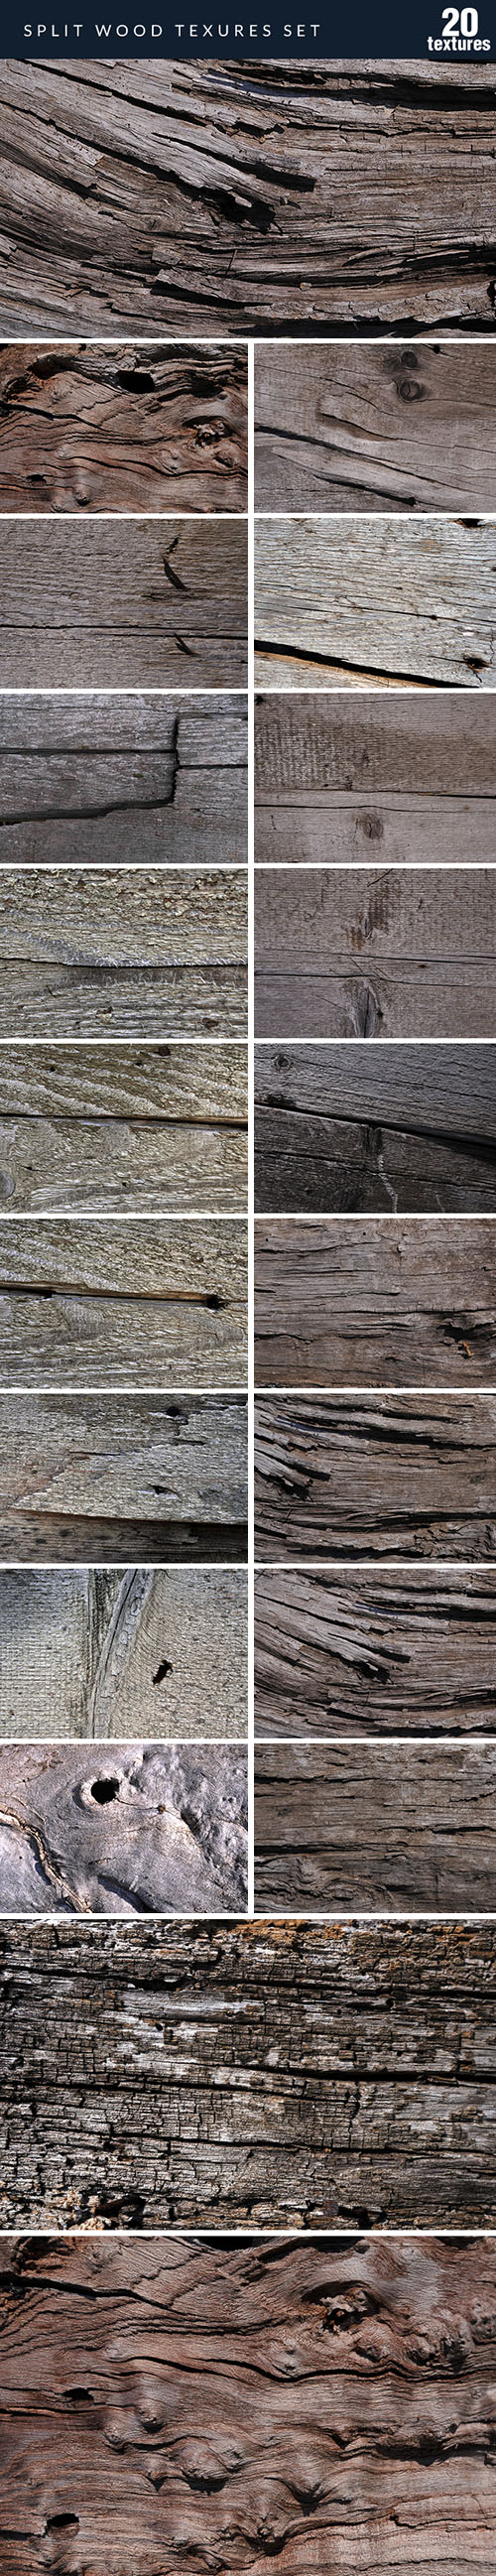 Designtnt - Split Wood Textures